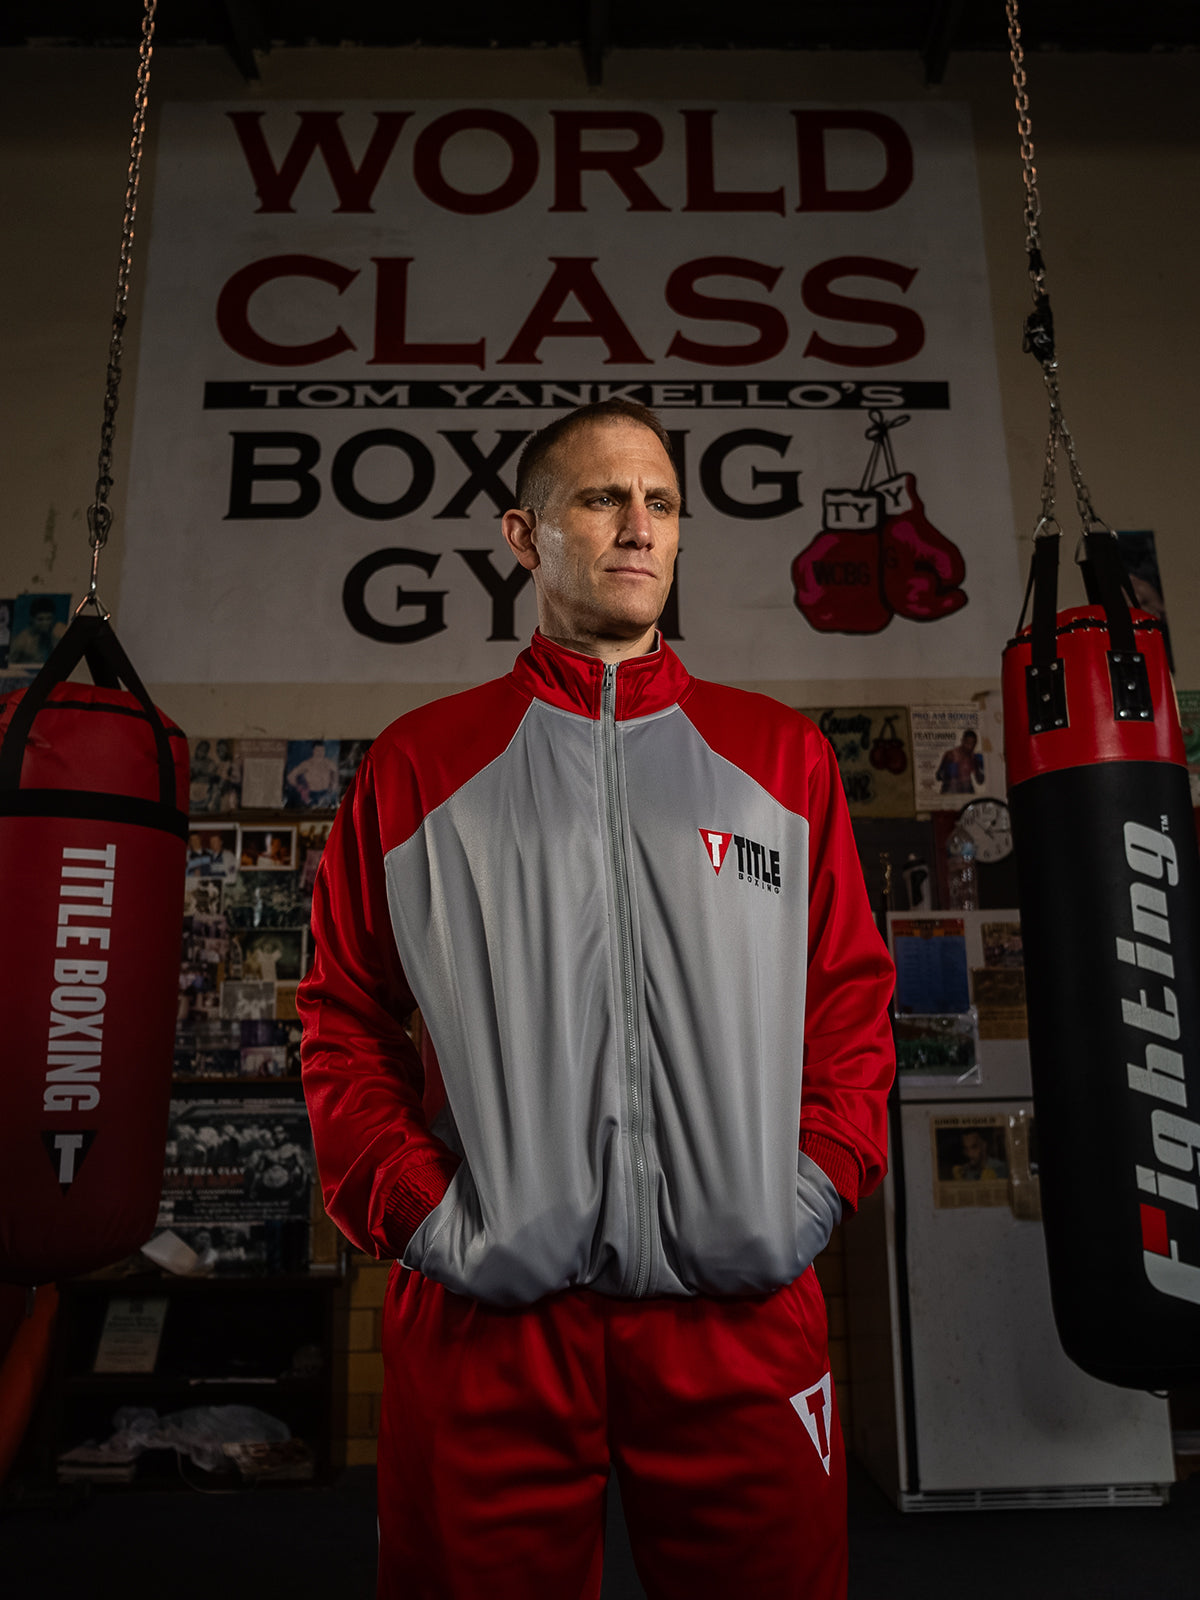 Tom Yankello's World Class Boxing Gym